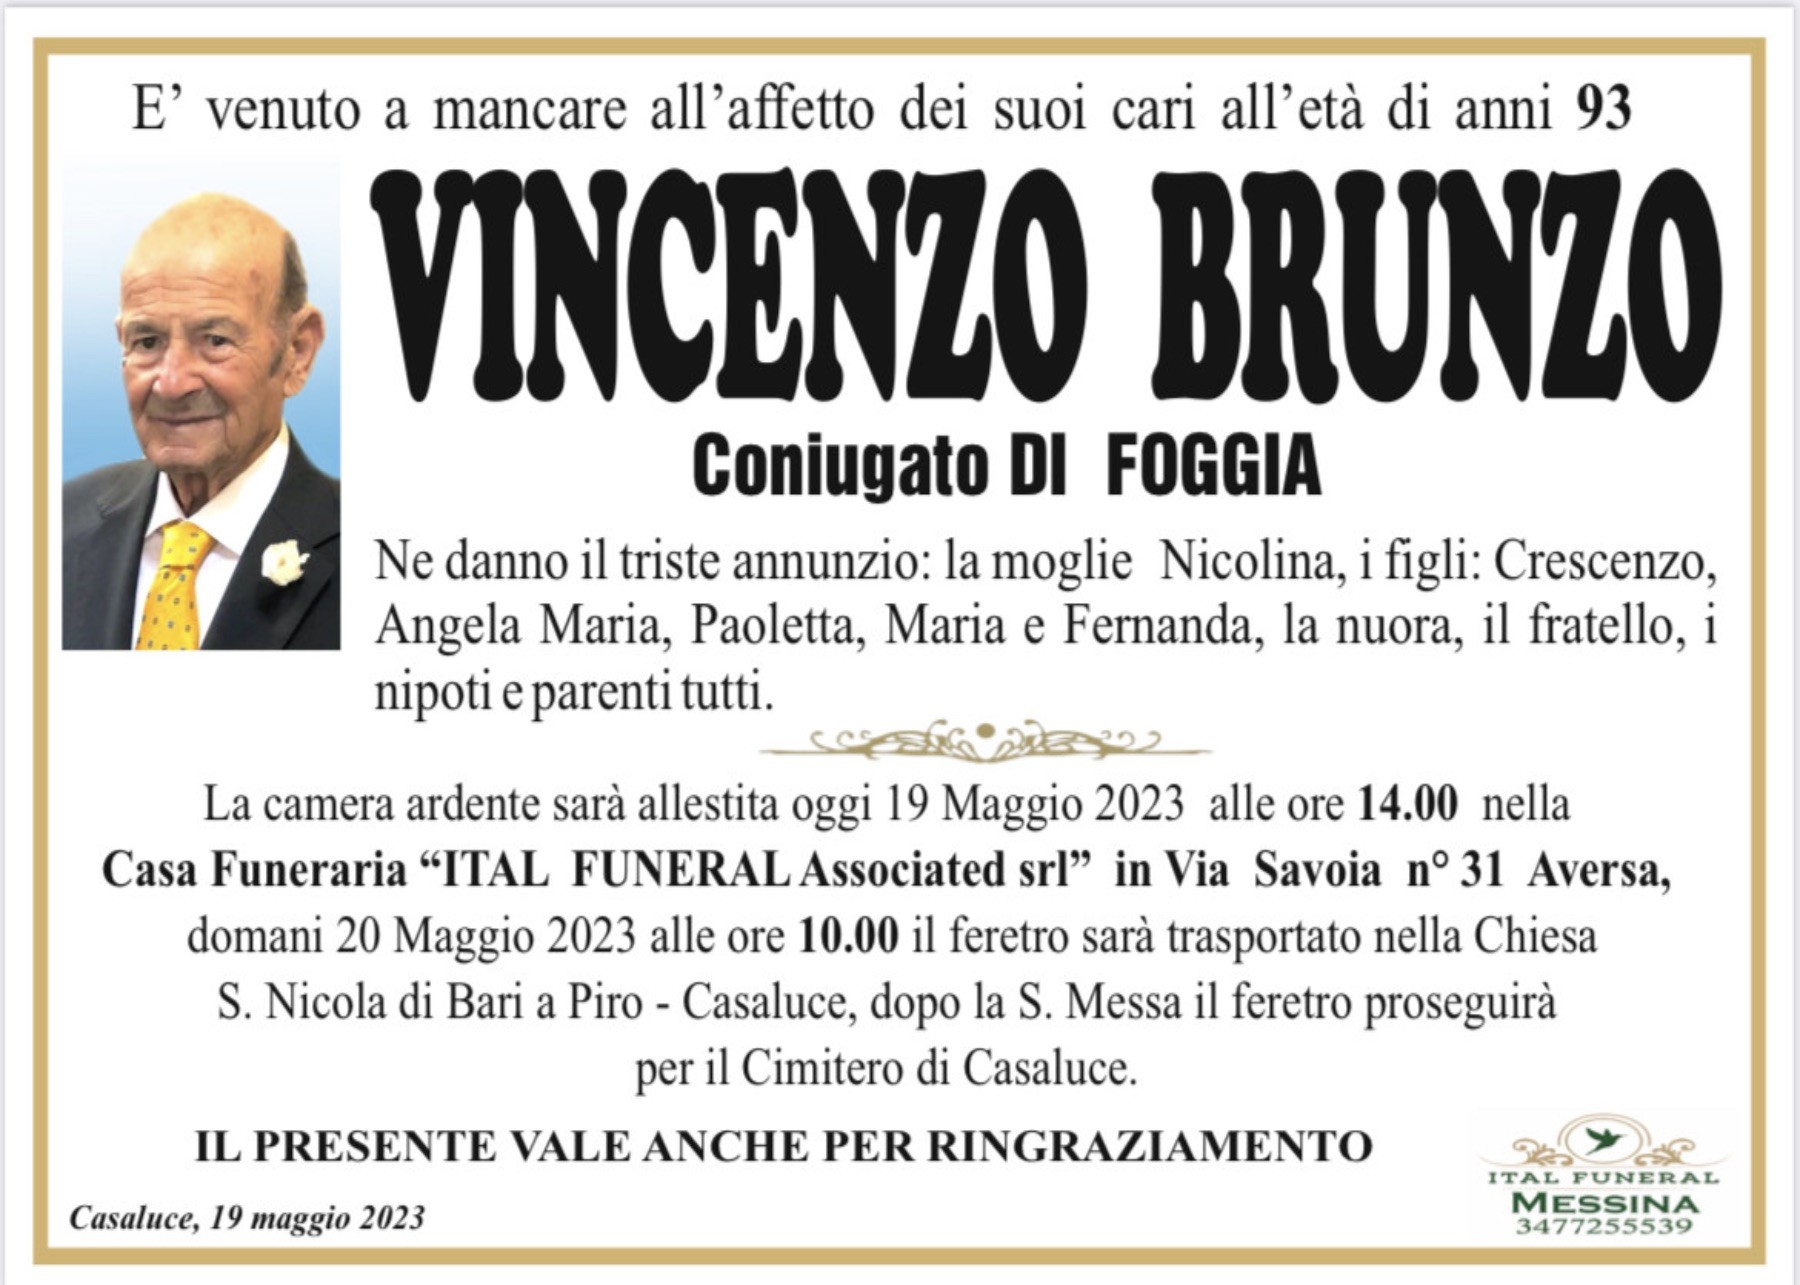 Vincenzo Brunzo